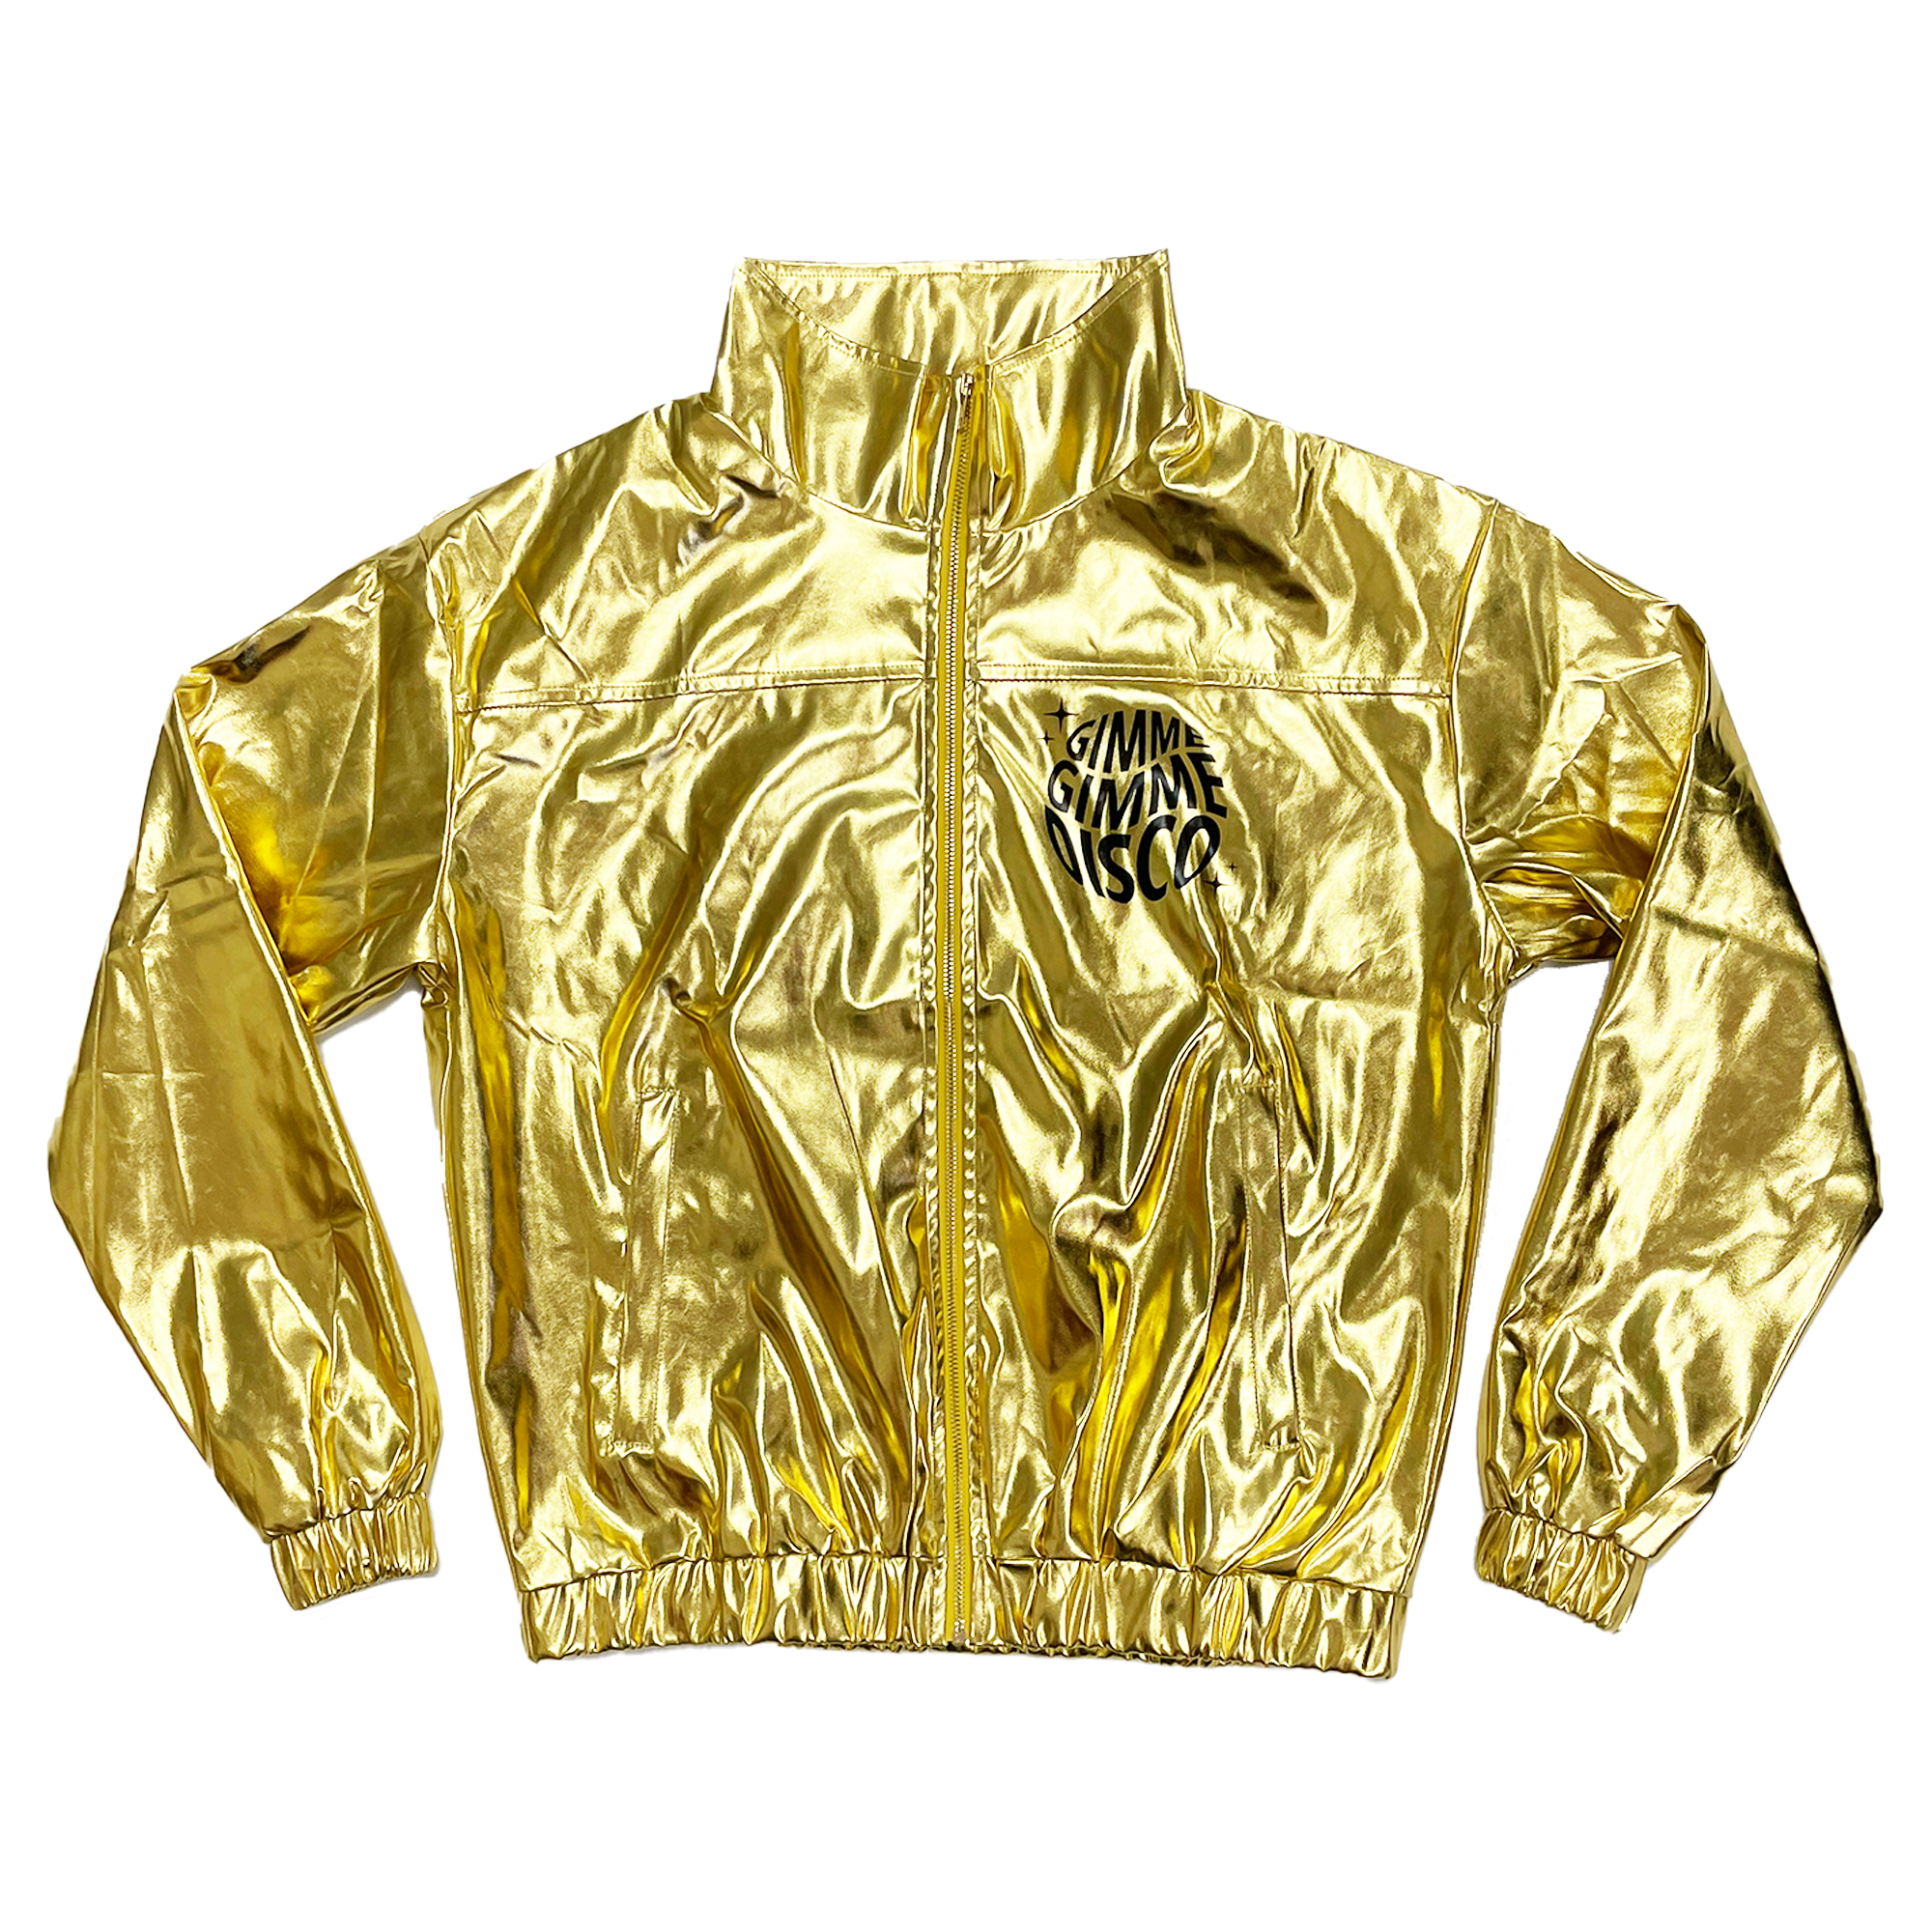 Gimme Gimme Disco - Gold Jacket